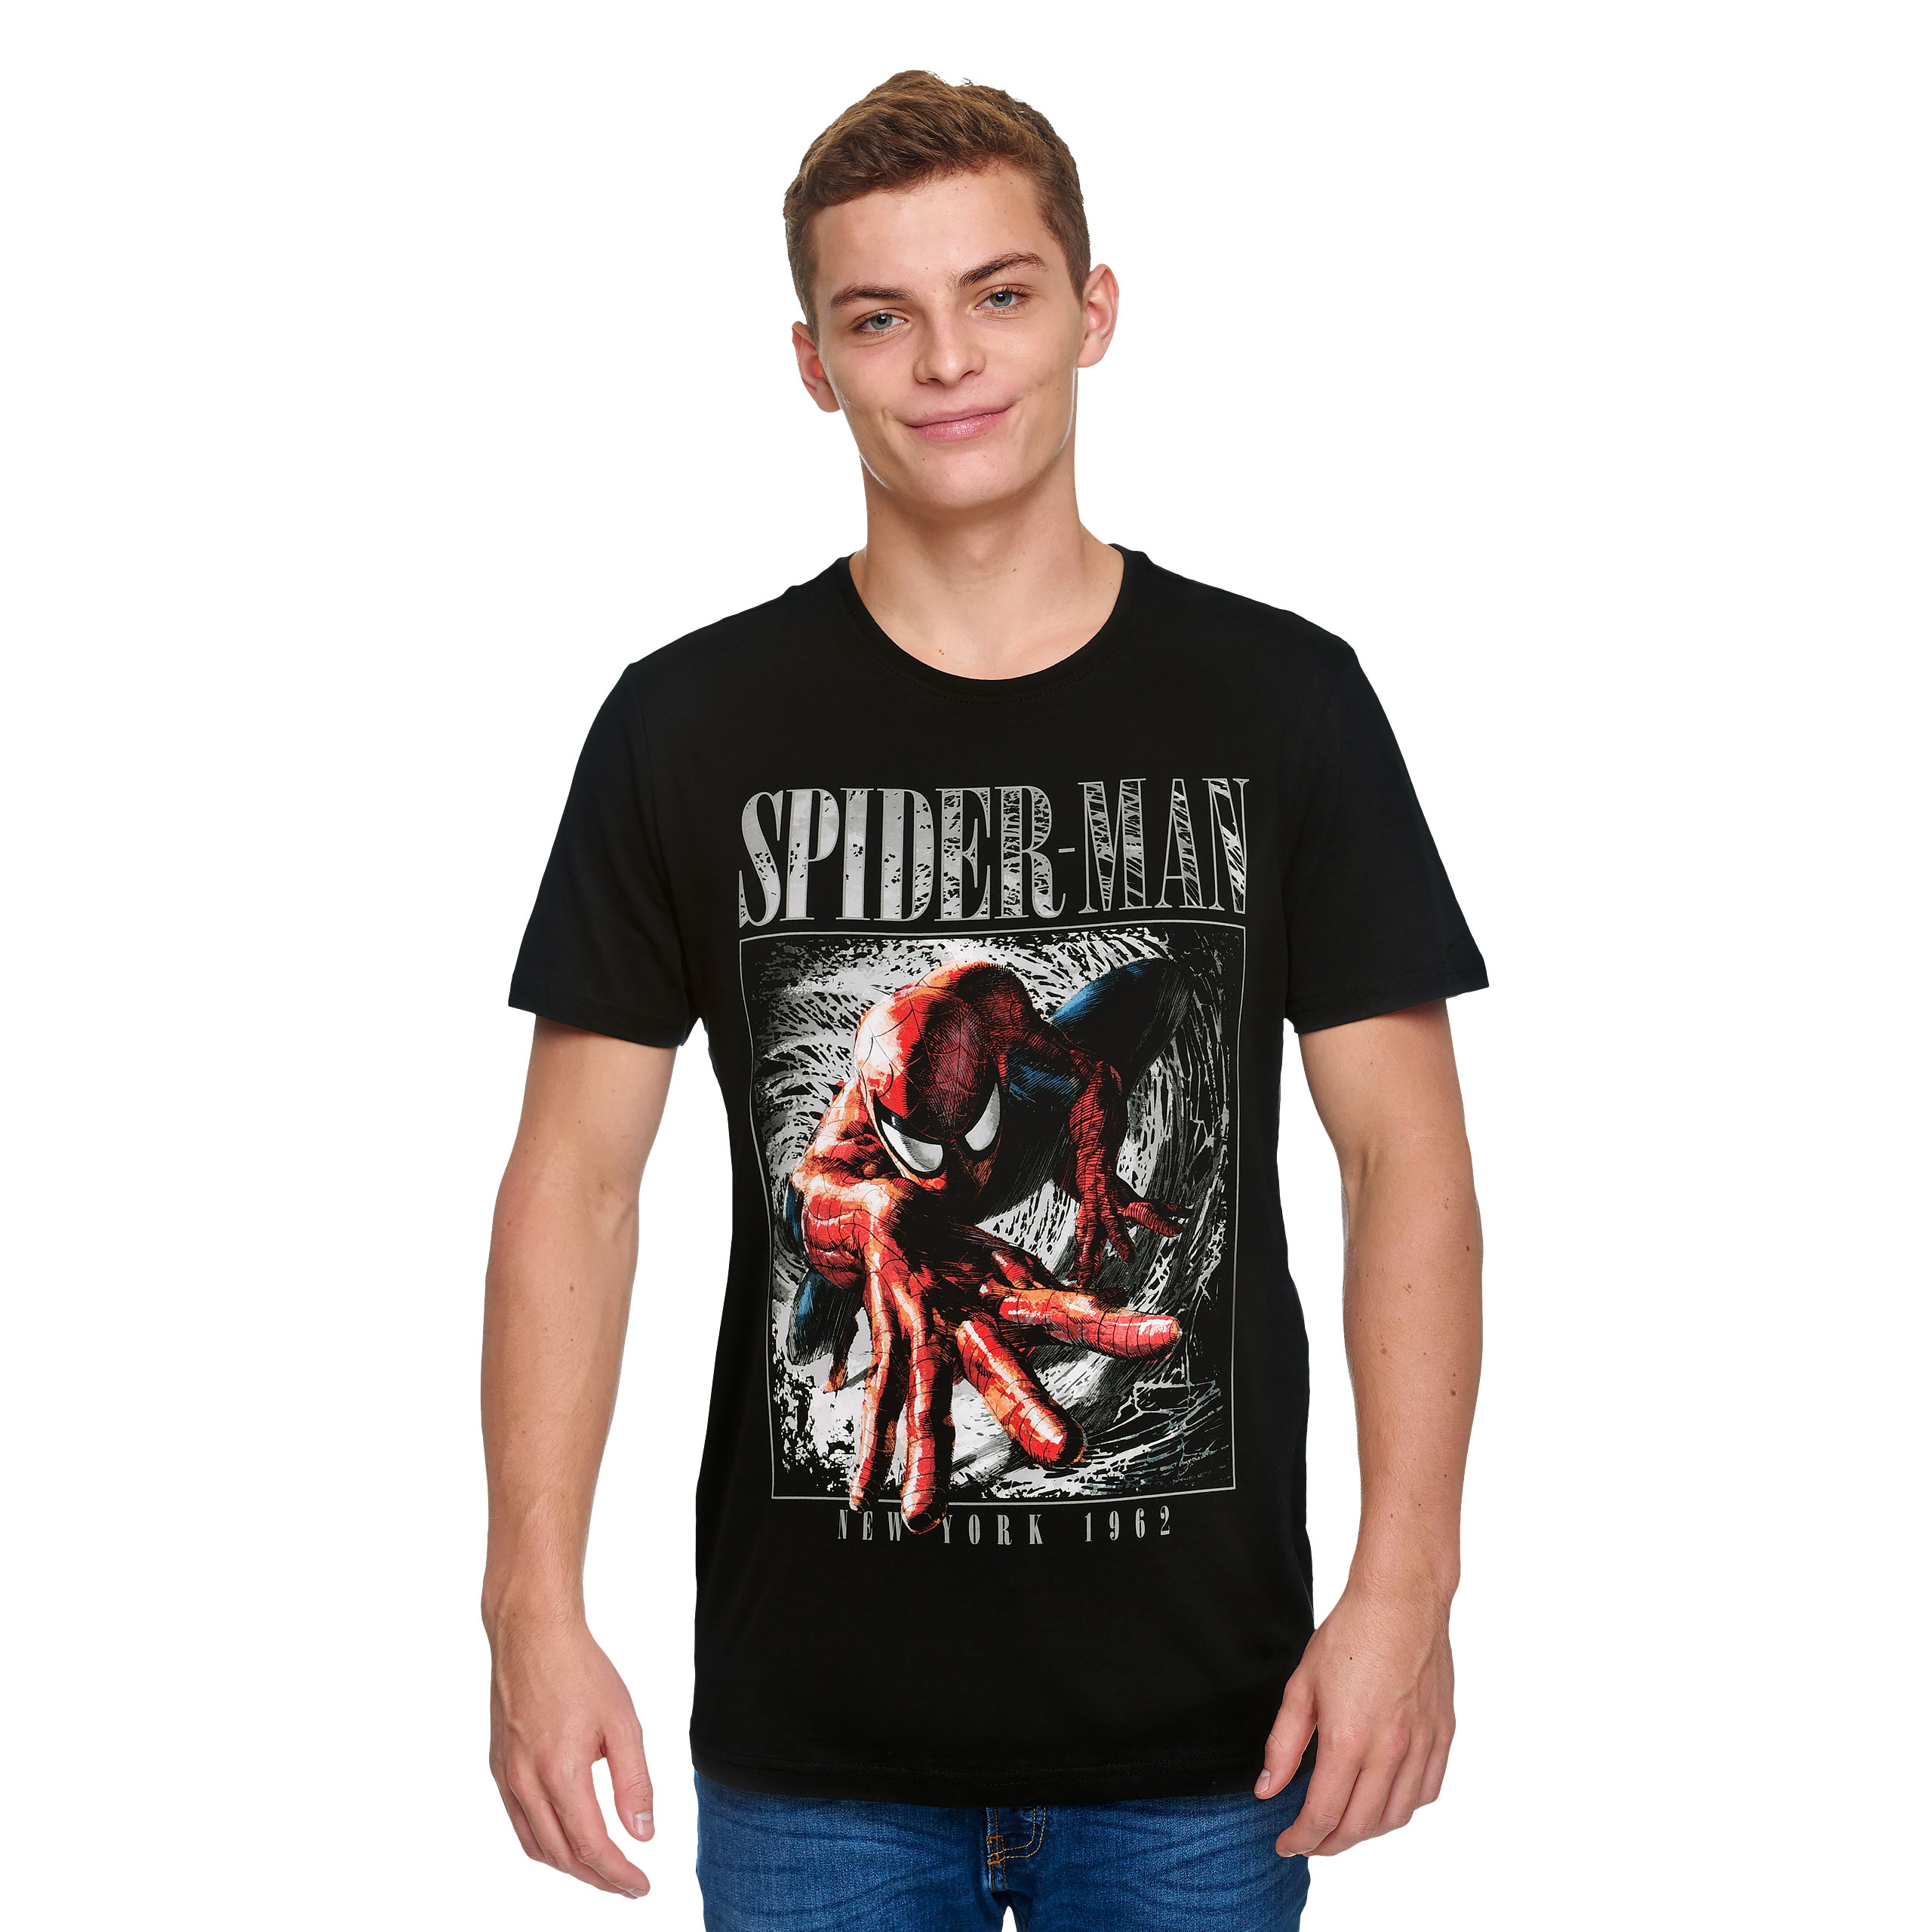 Spider-Man - New York 1962 Black T-Shirt